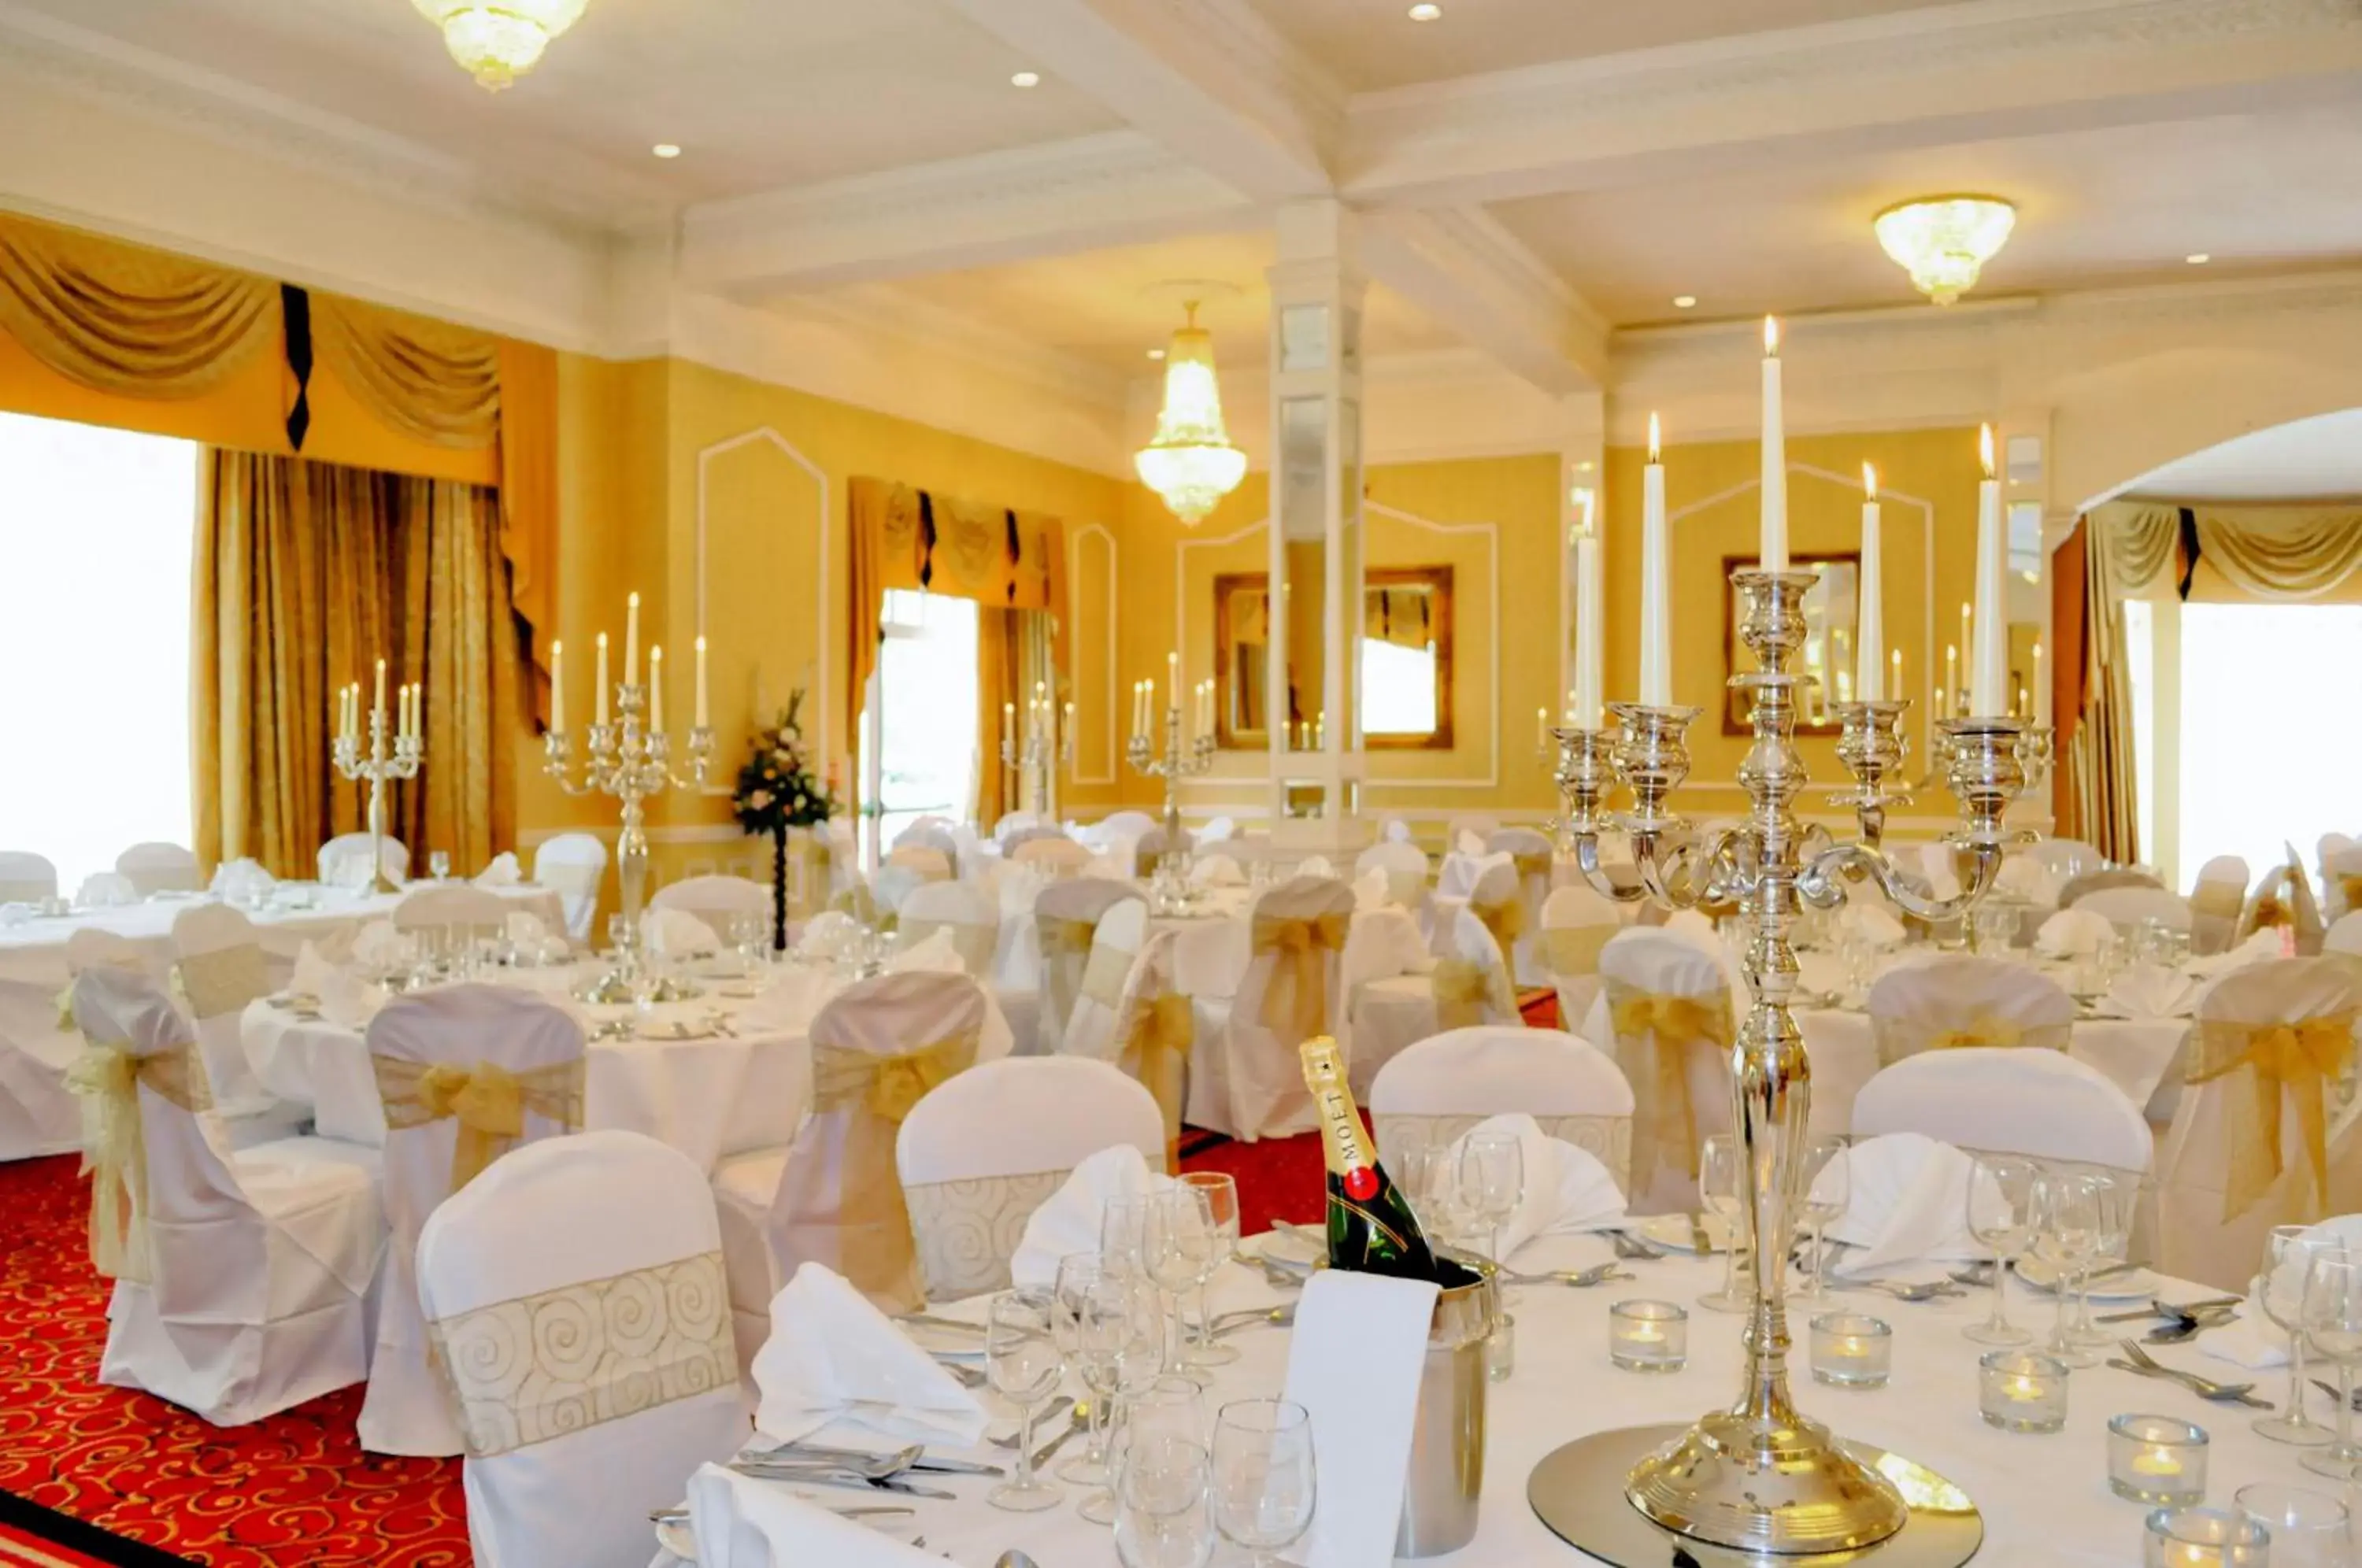 Banquet/Function facilities, Banquet Facilities in The Ardilaun Hotel